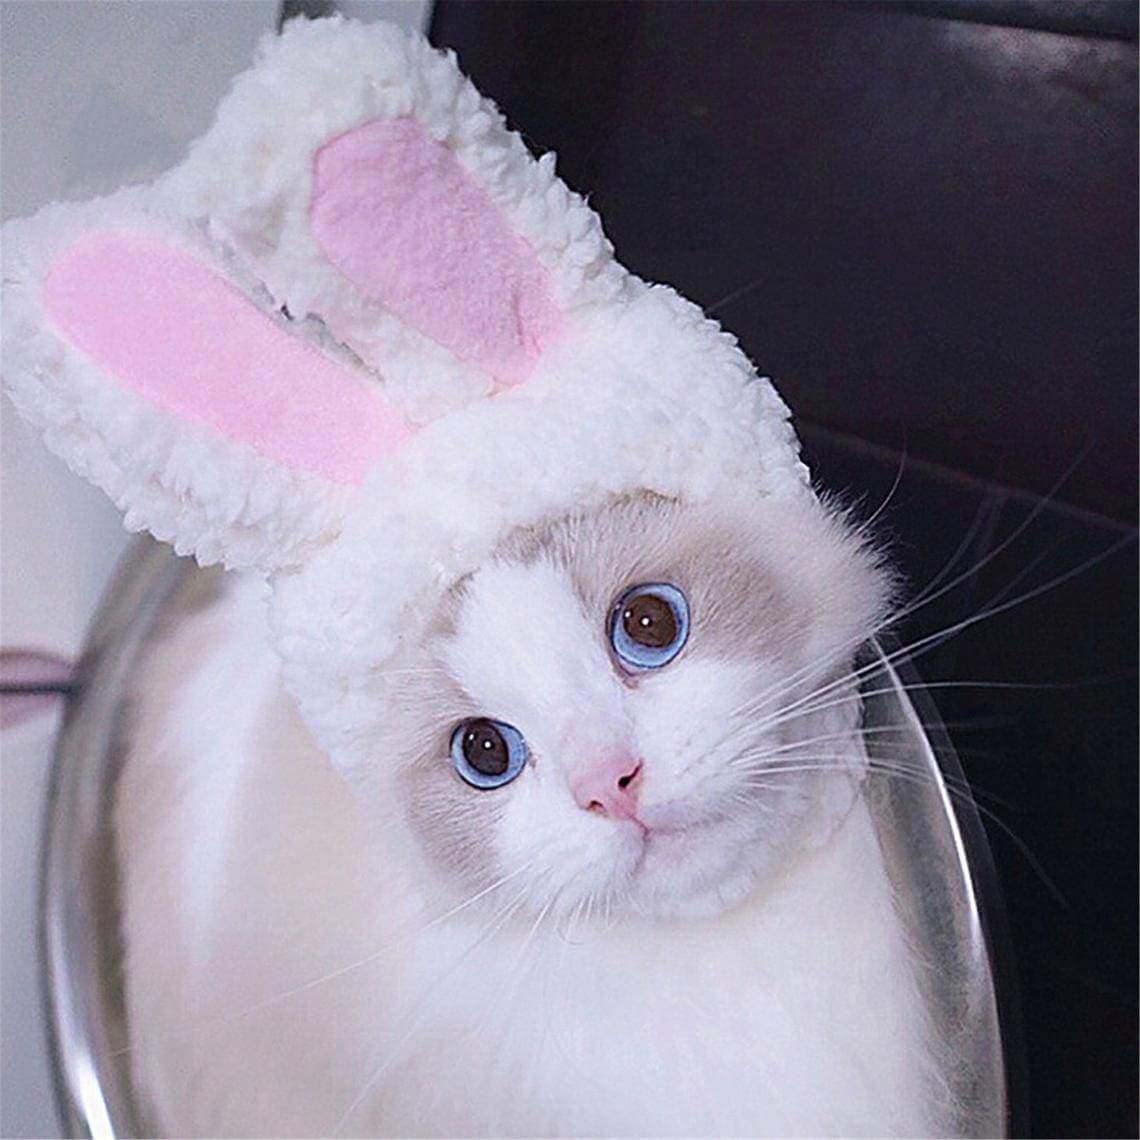 Bunny-Ears Cat Costume - KittyNook